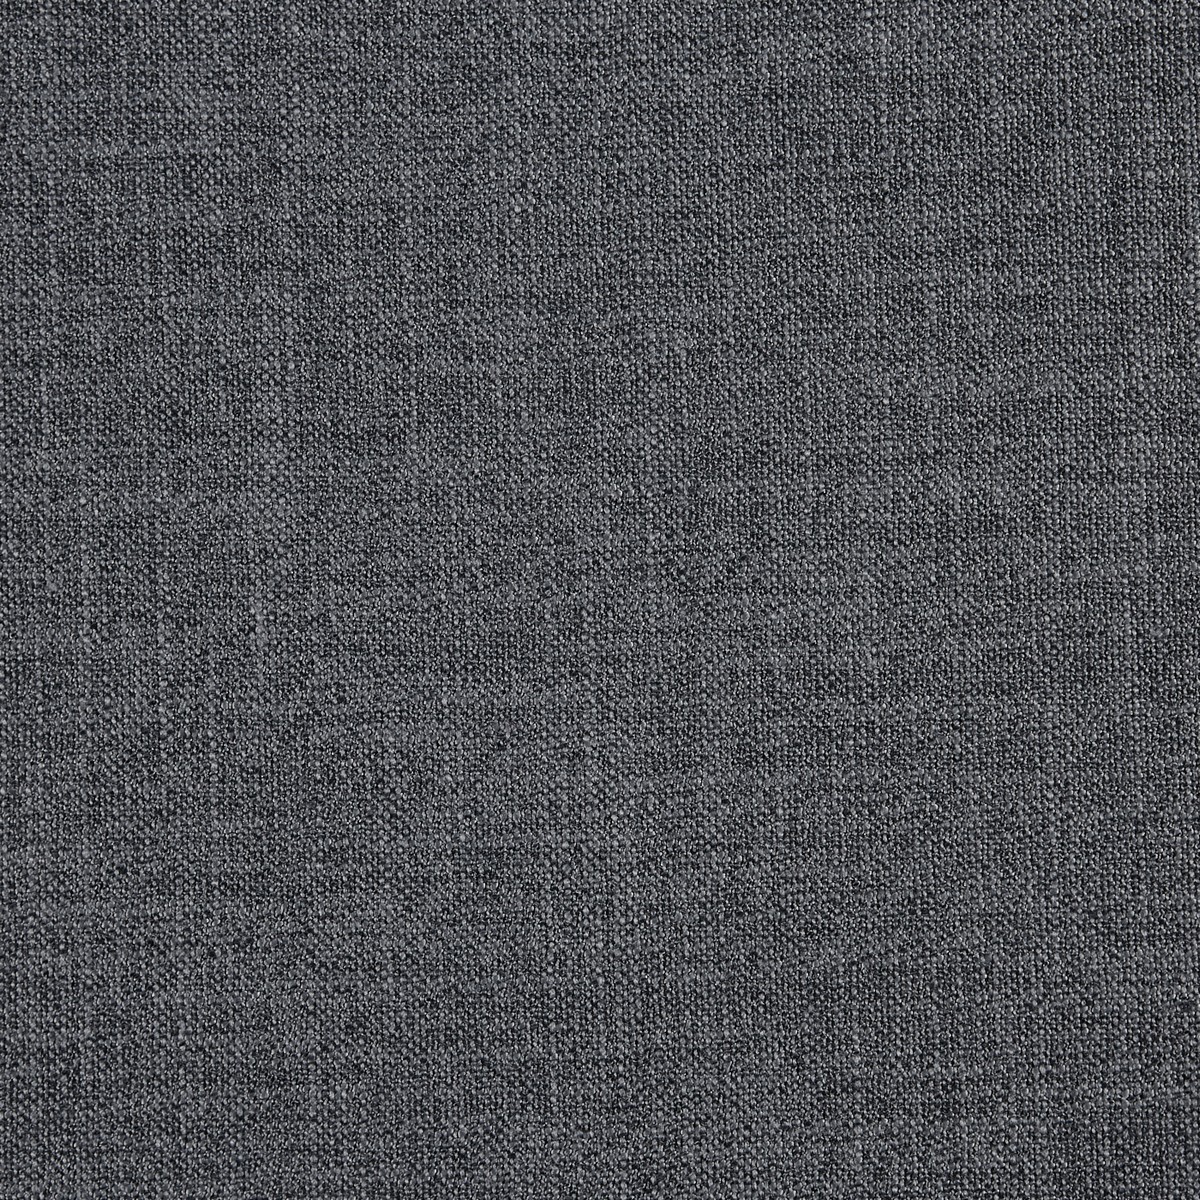 Whisp Slate Fabric by Prestigious Textiles